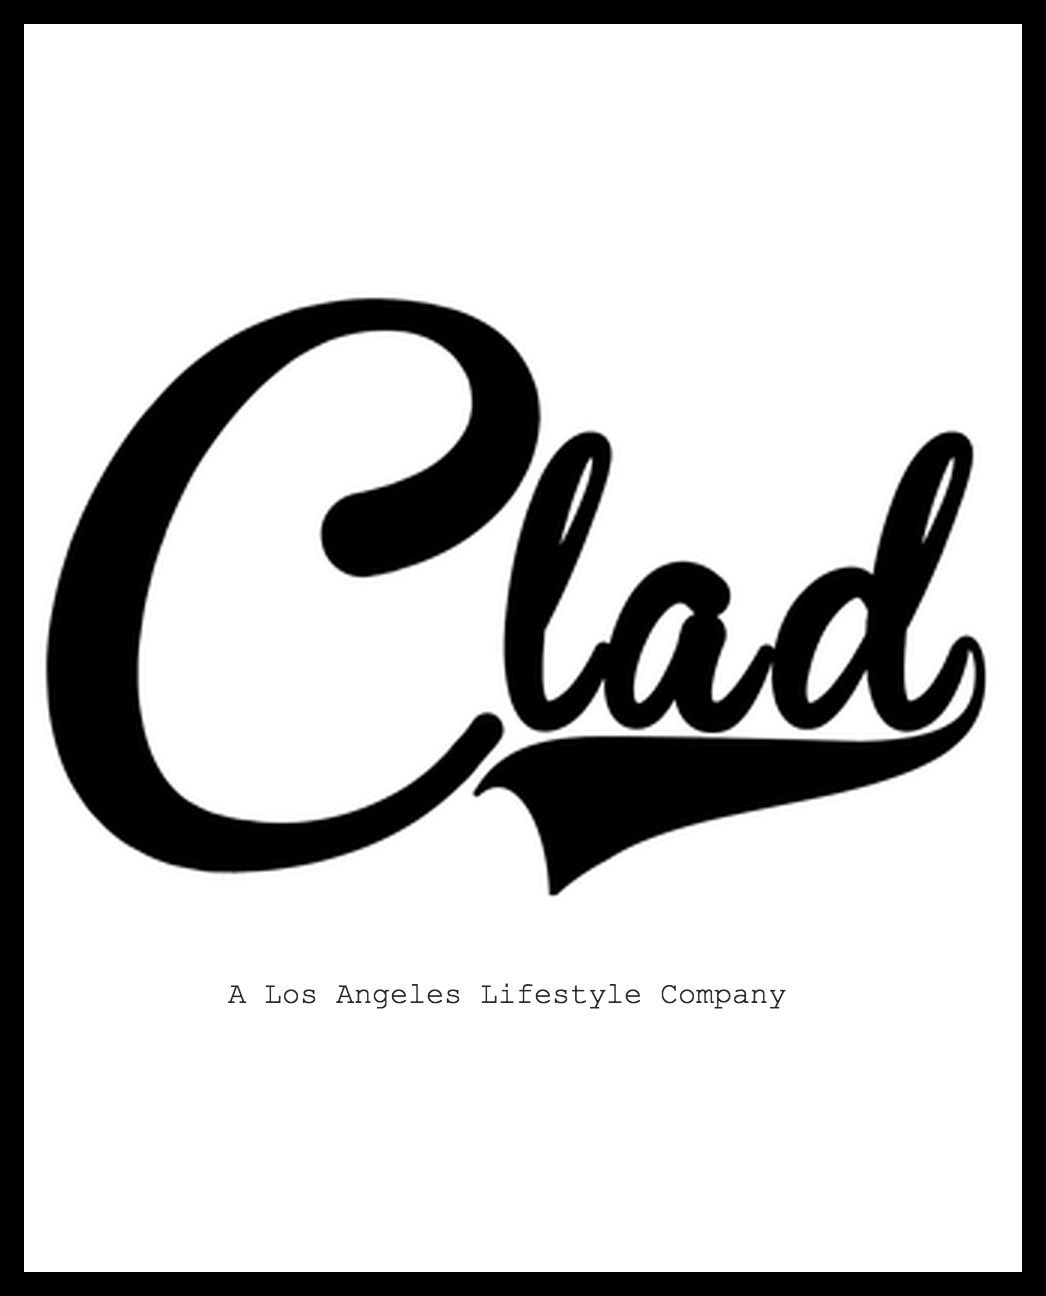 clad logo.jpg